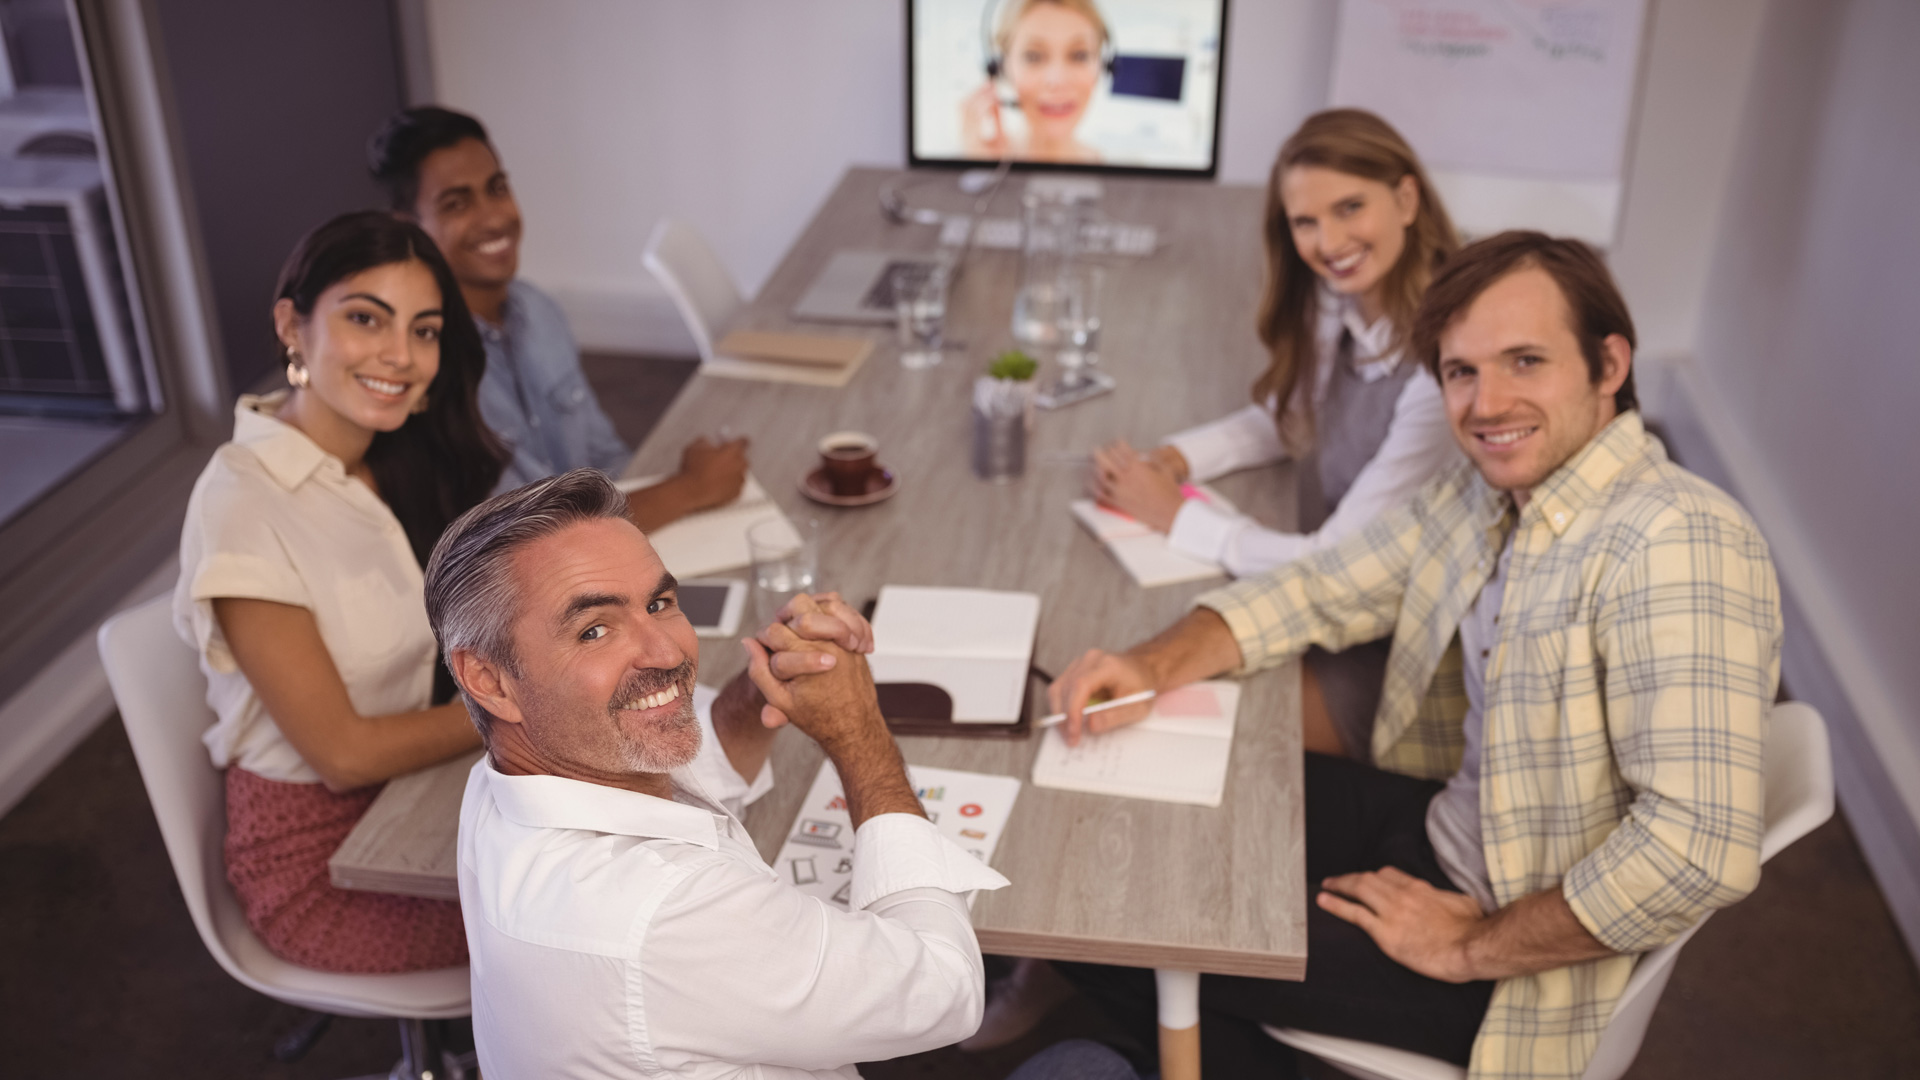 Conferencias Colabore, capacite e invite a sus clientes a reuniones virtuales.